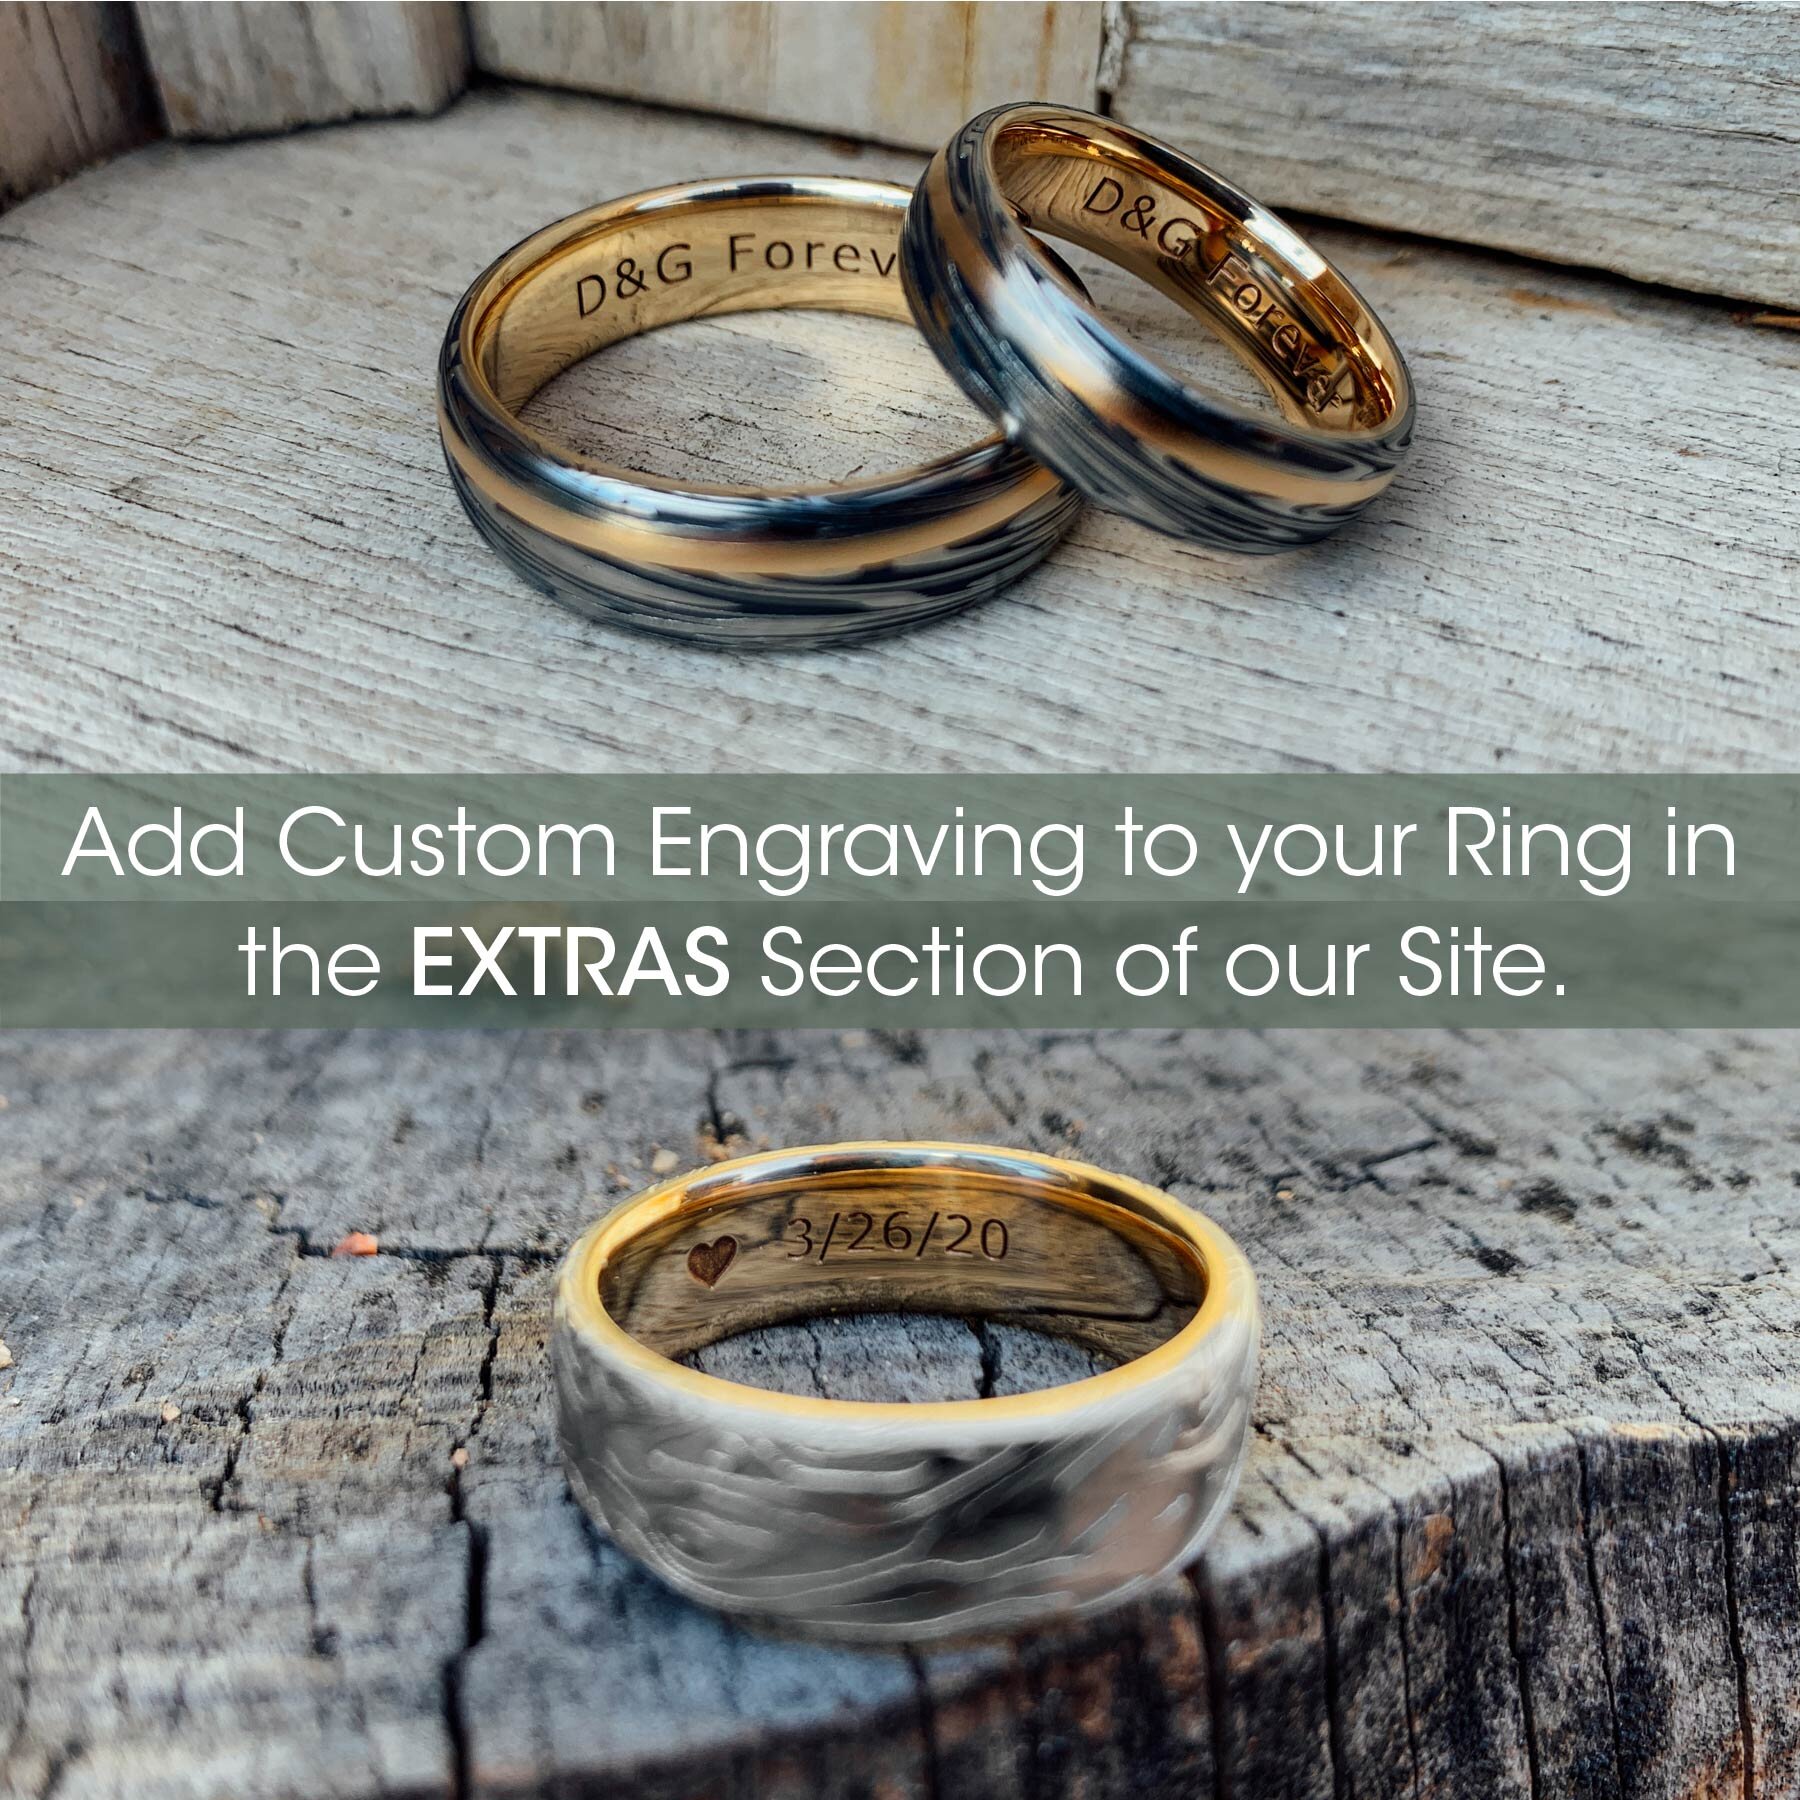 Engagement Ring and Wedding Ring Engraving Ideas | Ritani